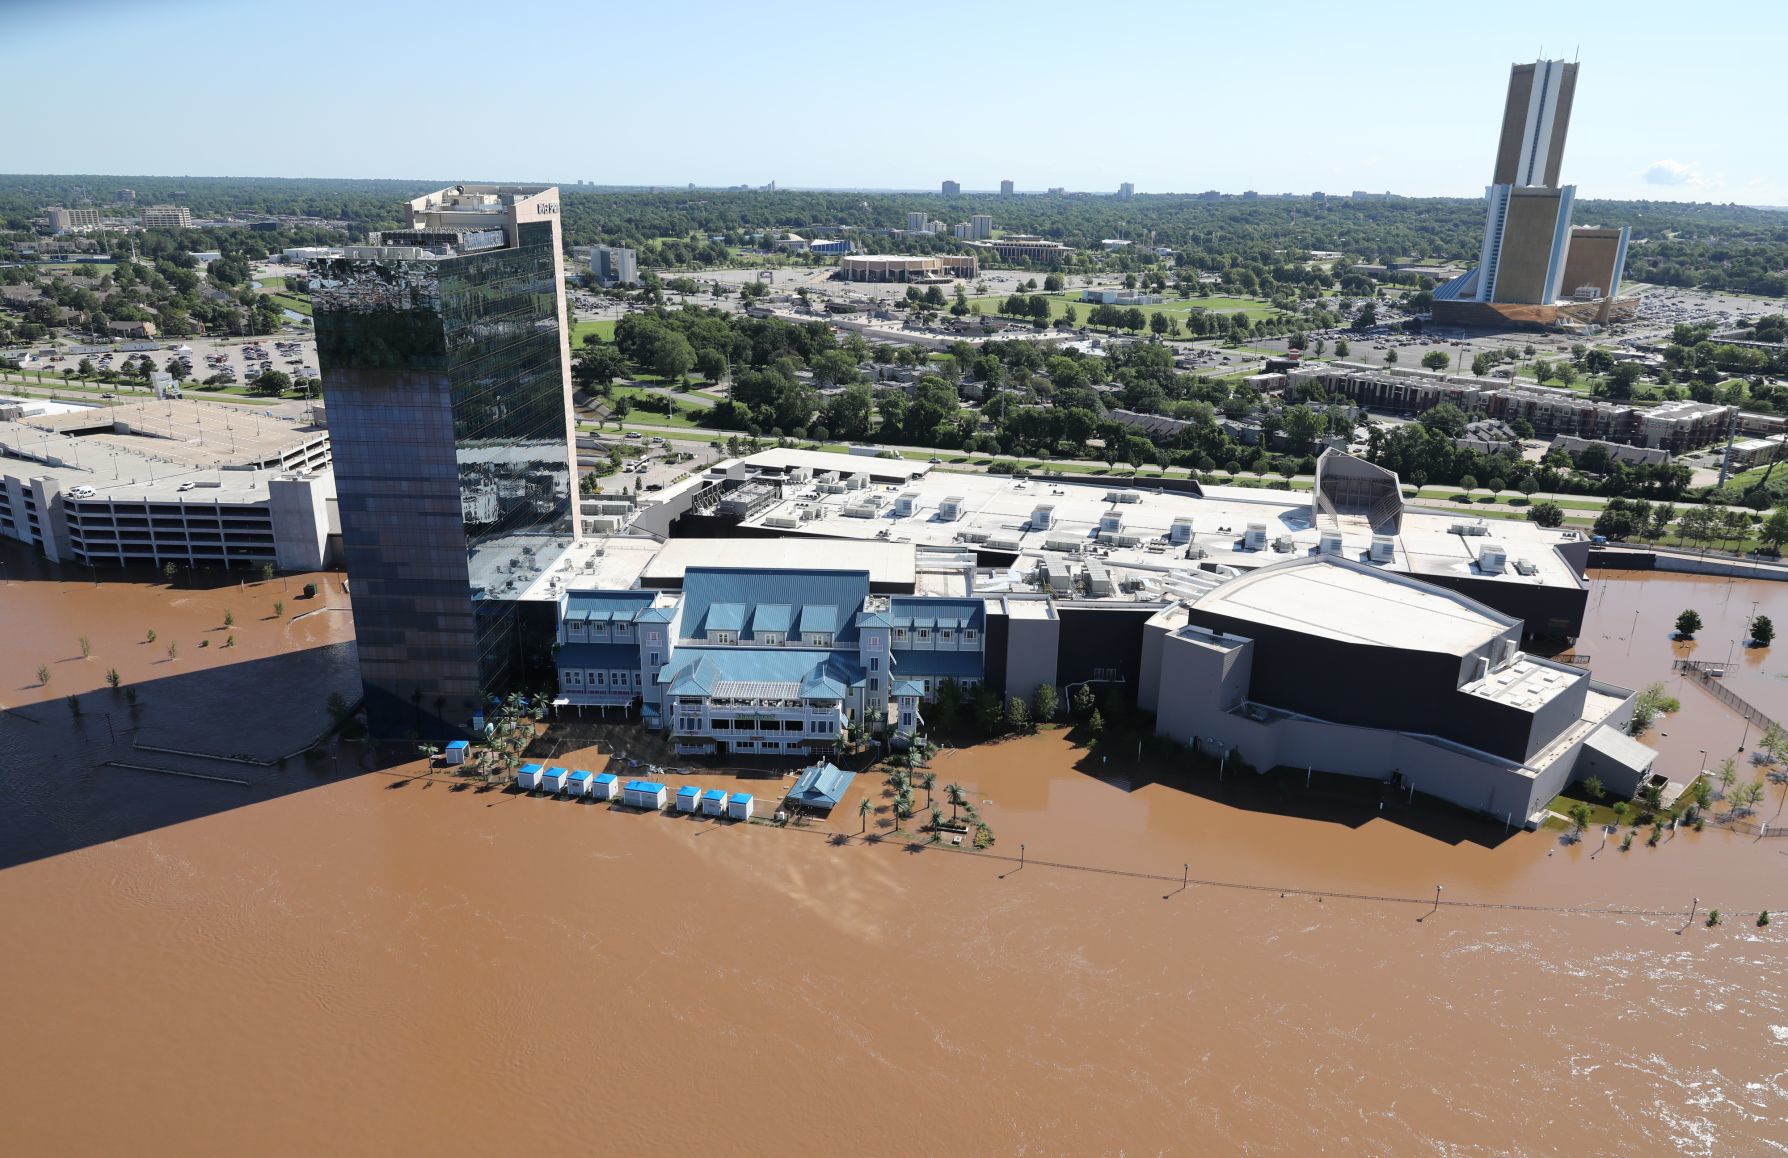 river spirit casino flooding 2019